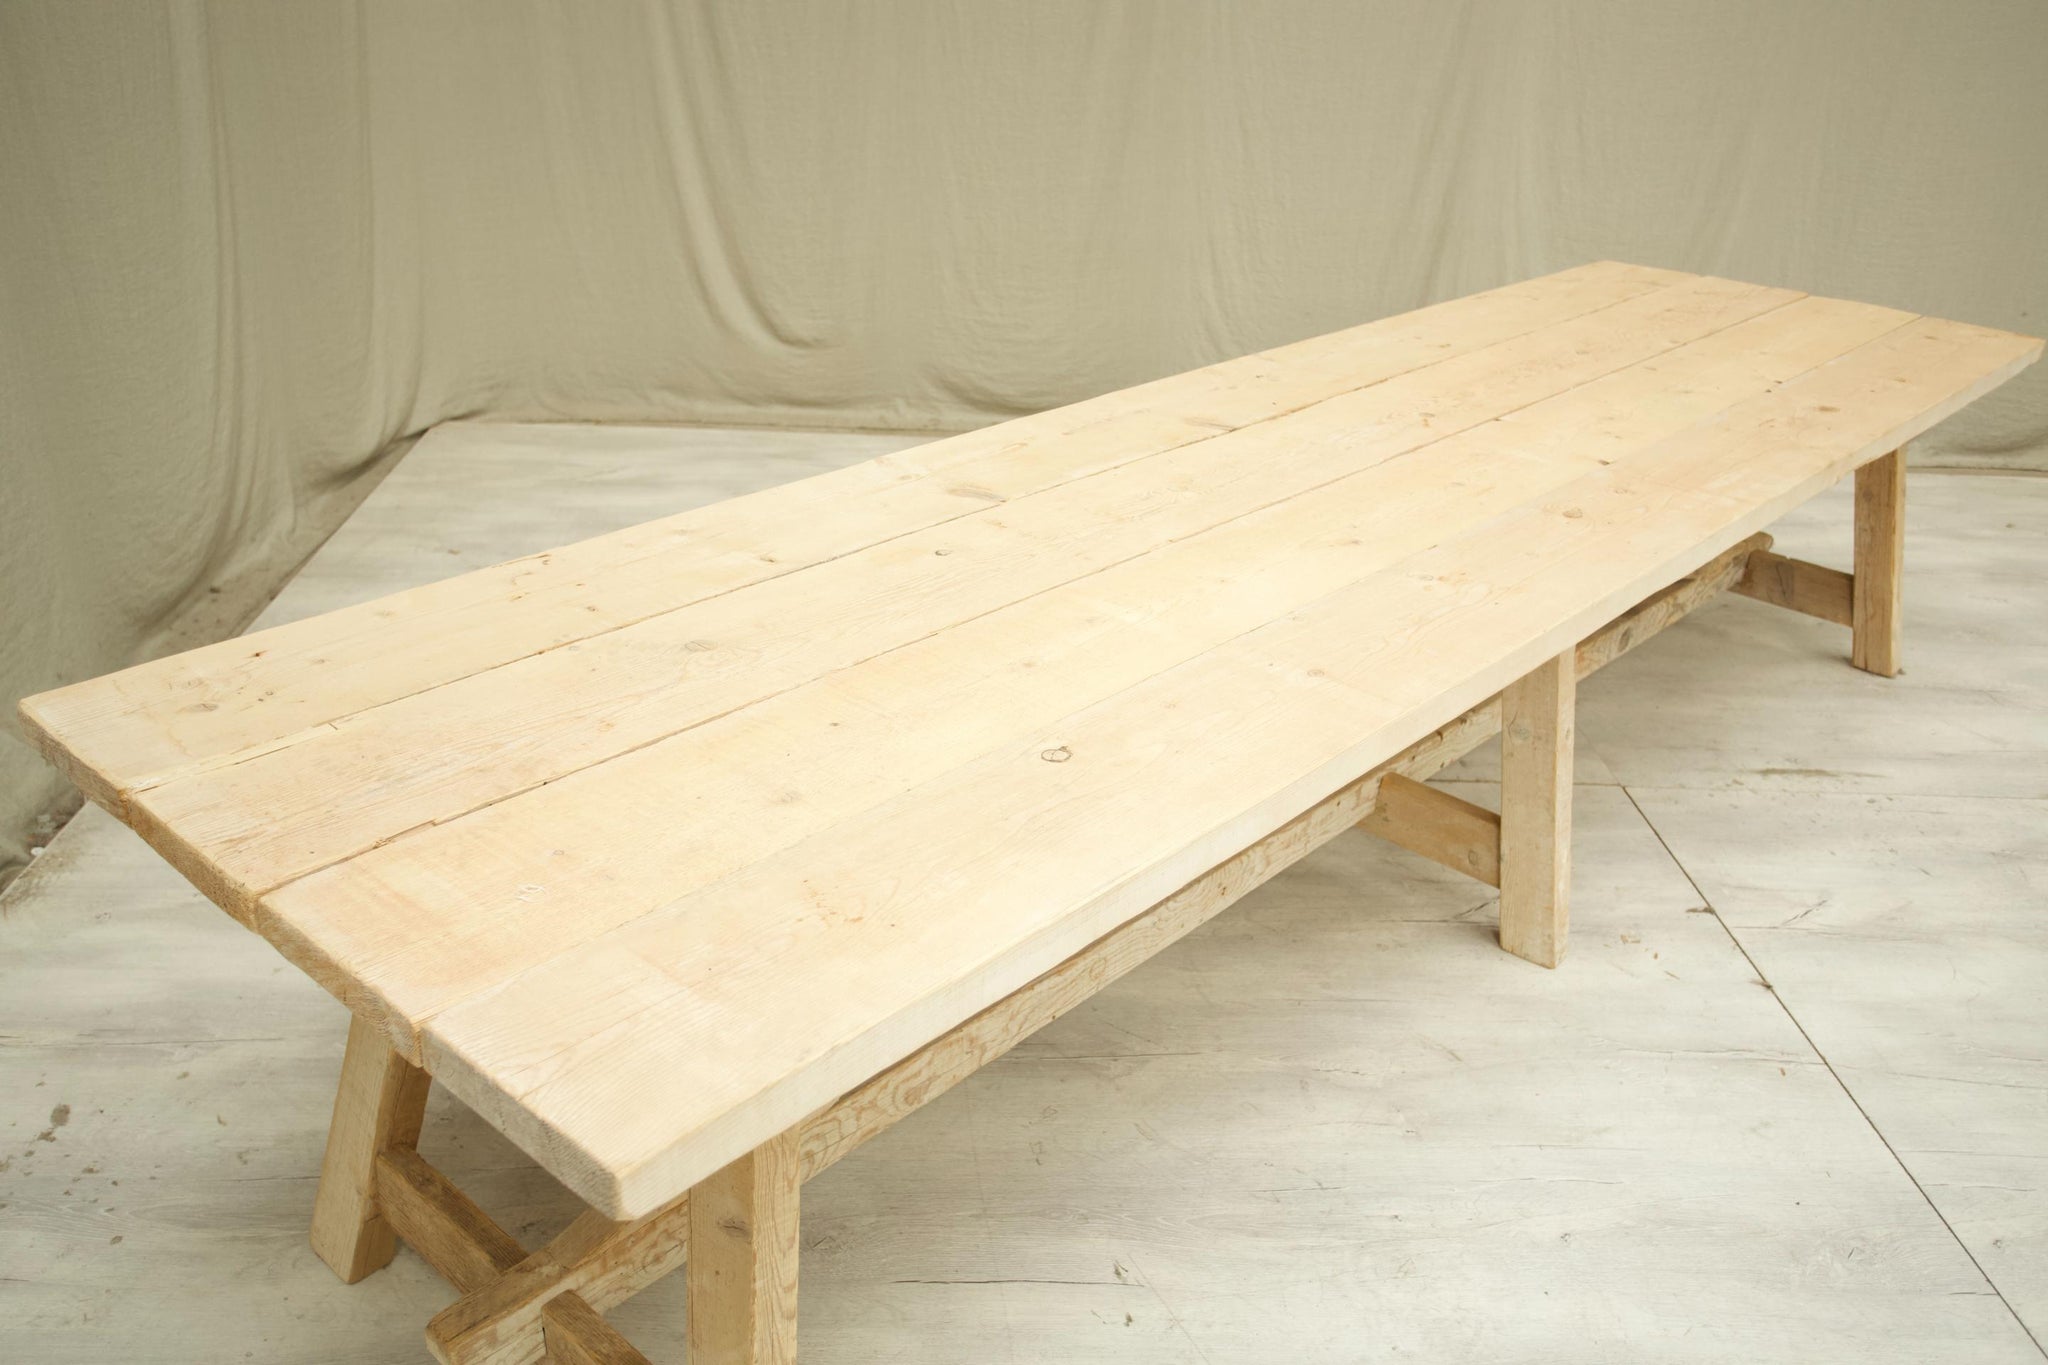 Rustic 'Farmhouse' pine dining table - 6 legged